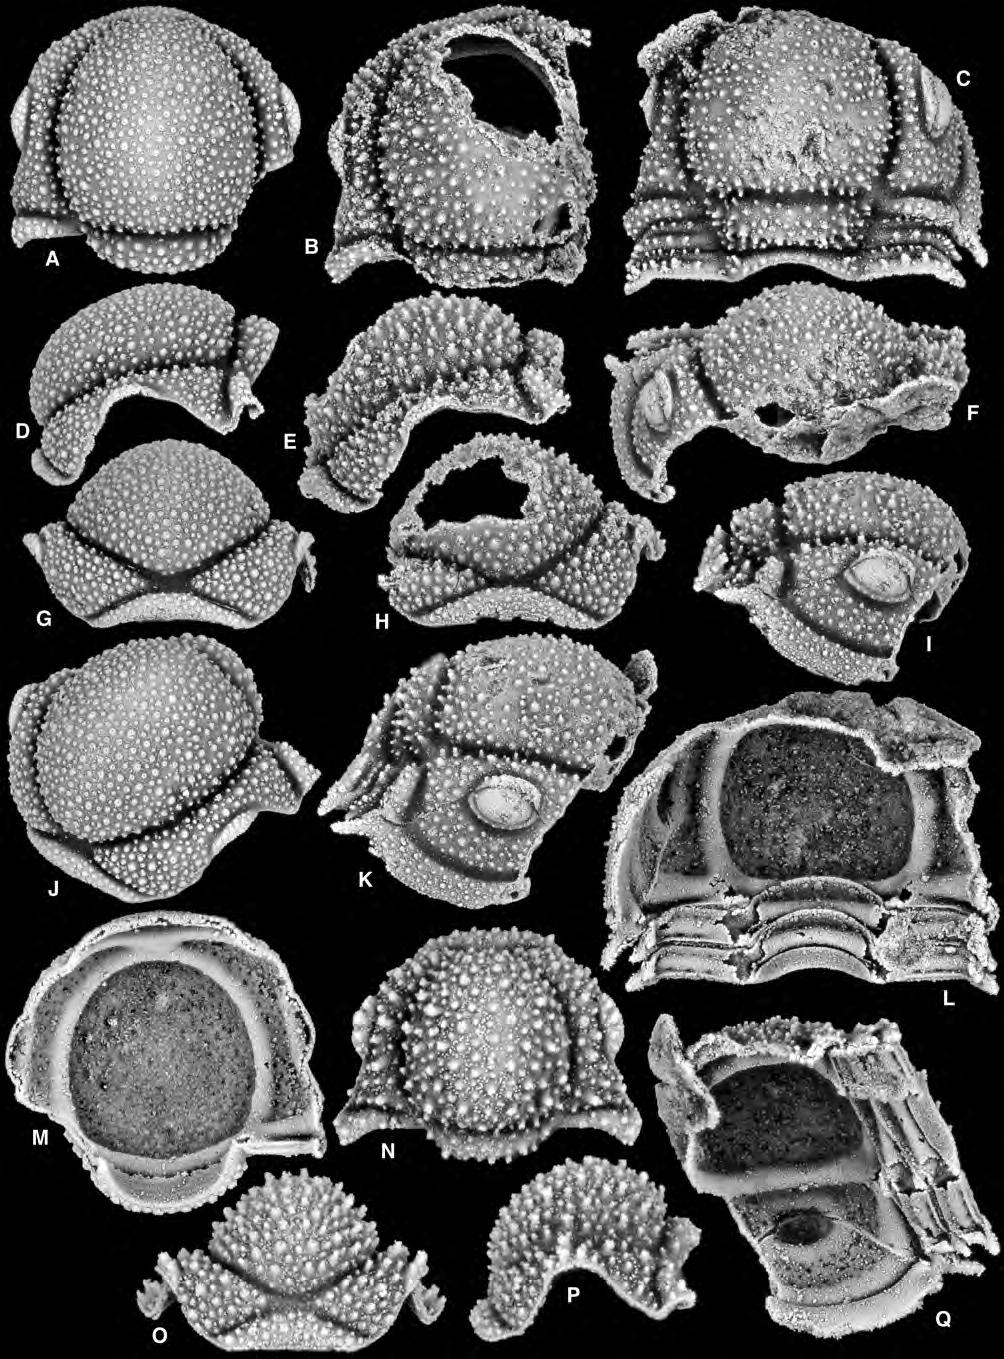 AAP Memoir 45 (2014) 227 B, E, H, cranidium, SUI 134824, dorsal, left lateral, and anterior views, x20.